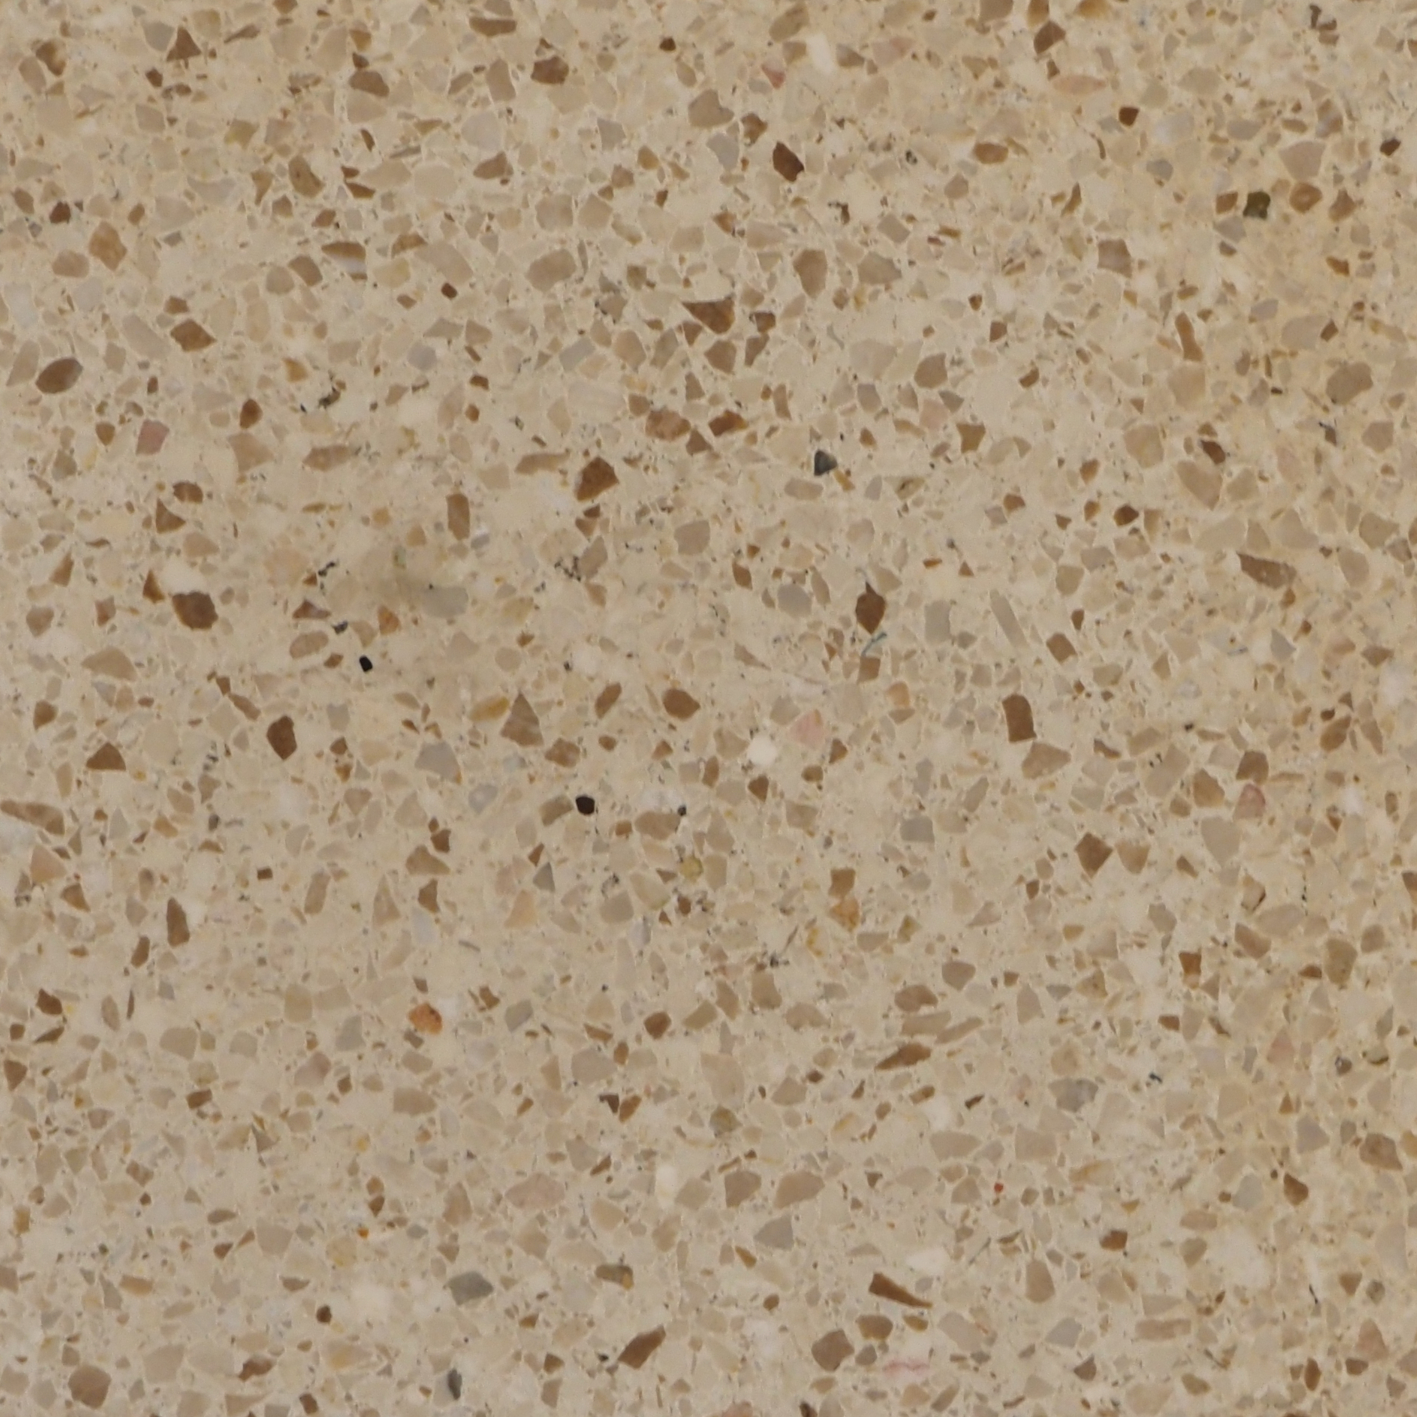 Terrazzo 'Castino' floor tiles (30 x 30 cm) - Sold per m2